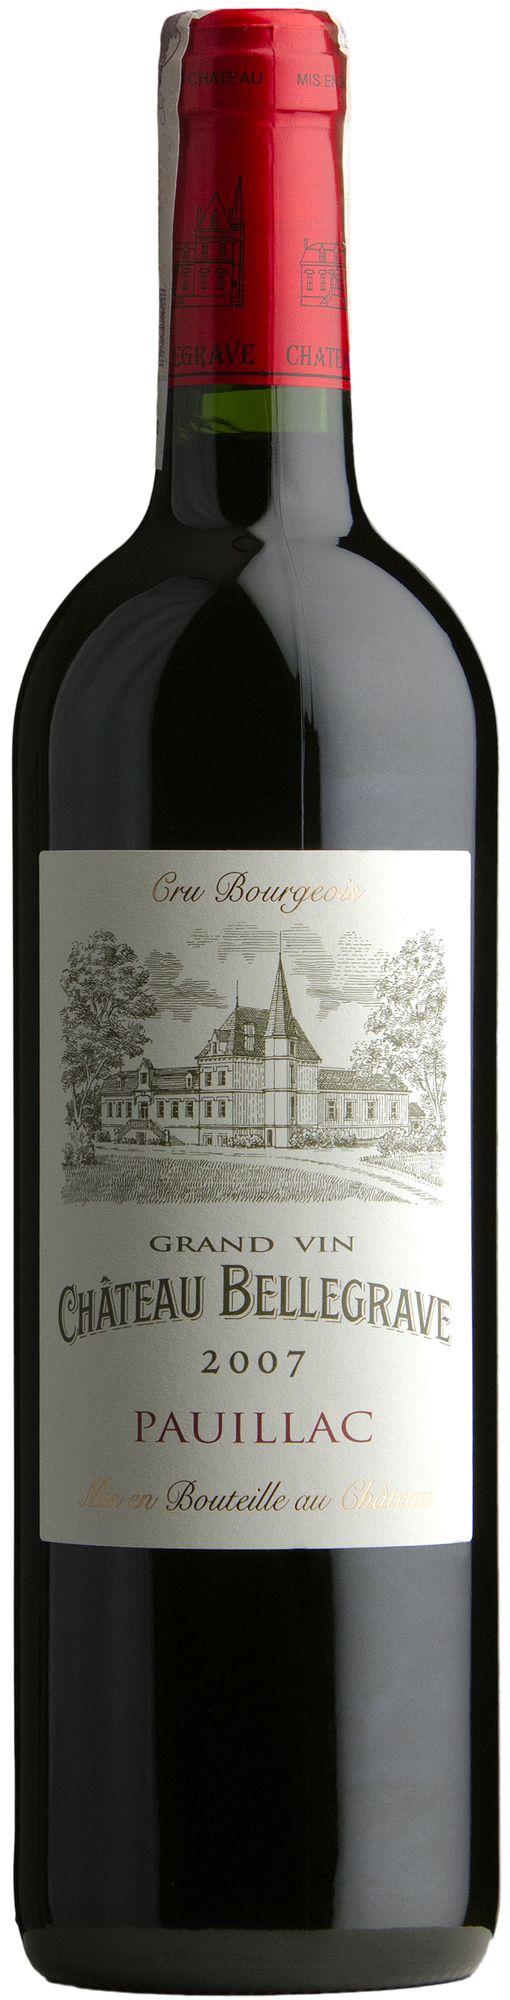 Wino Chateau Bellegrave Pauillac Cru Bourgeois AOC